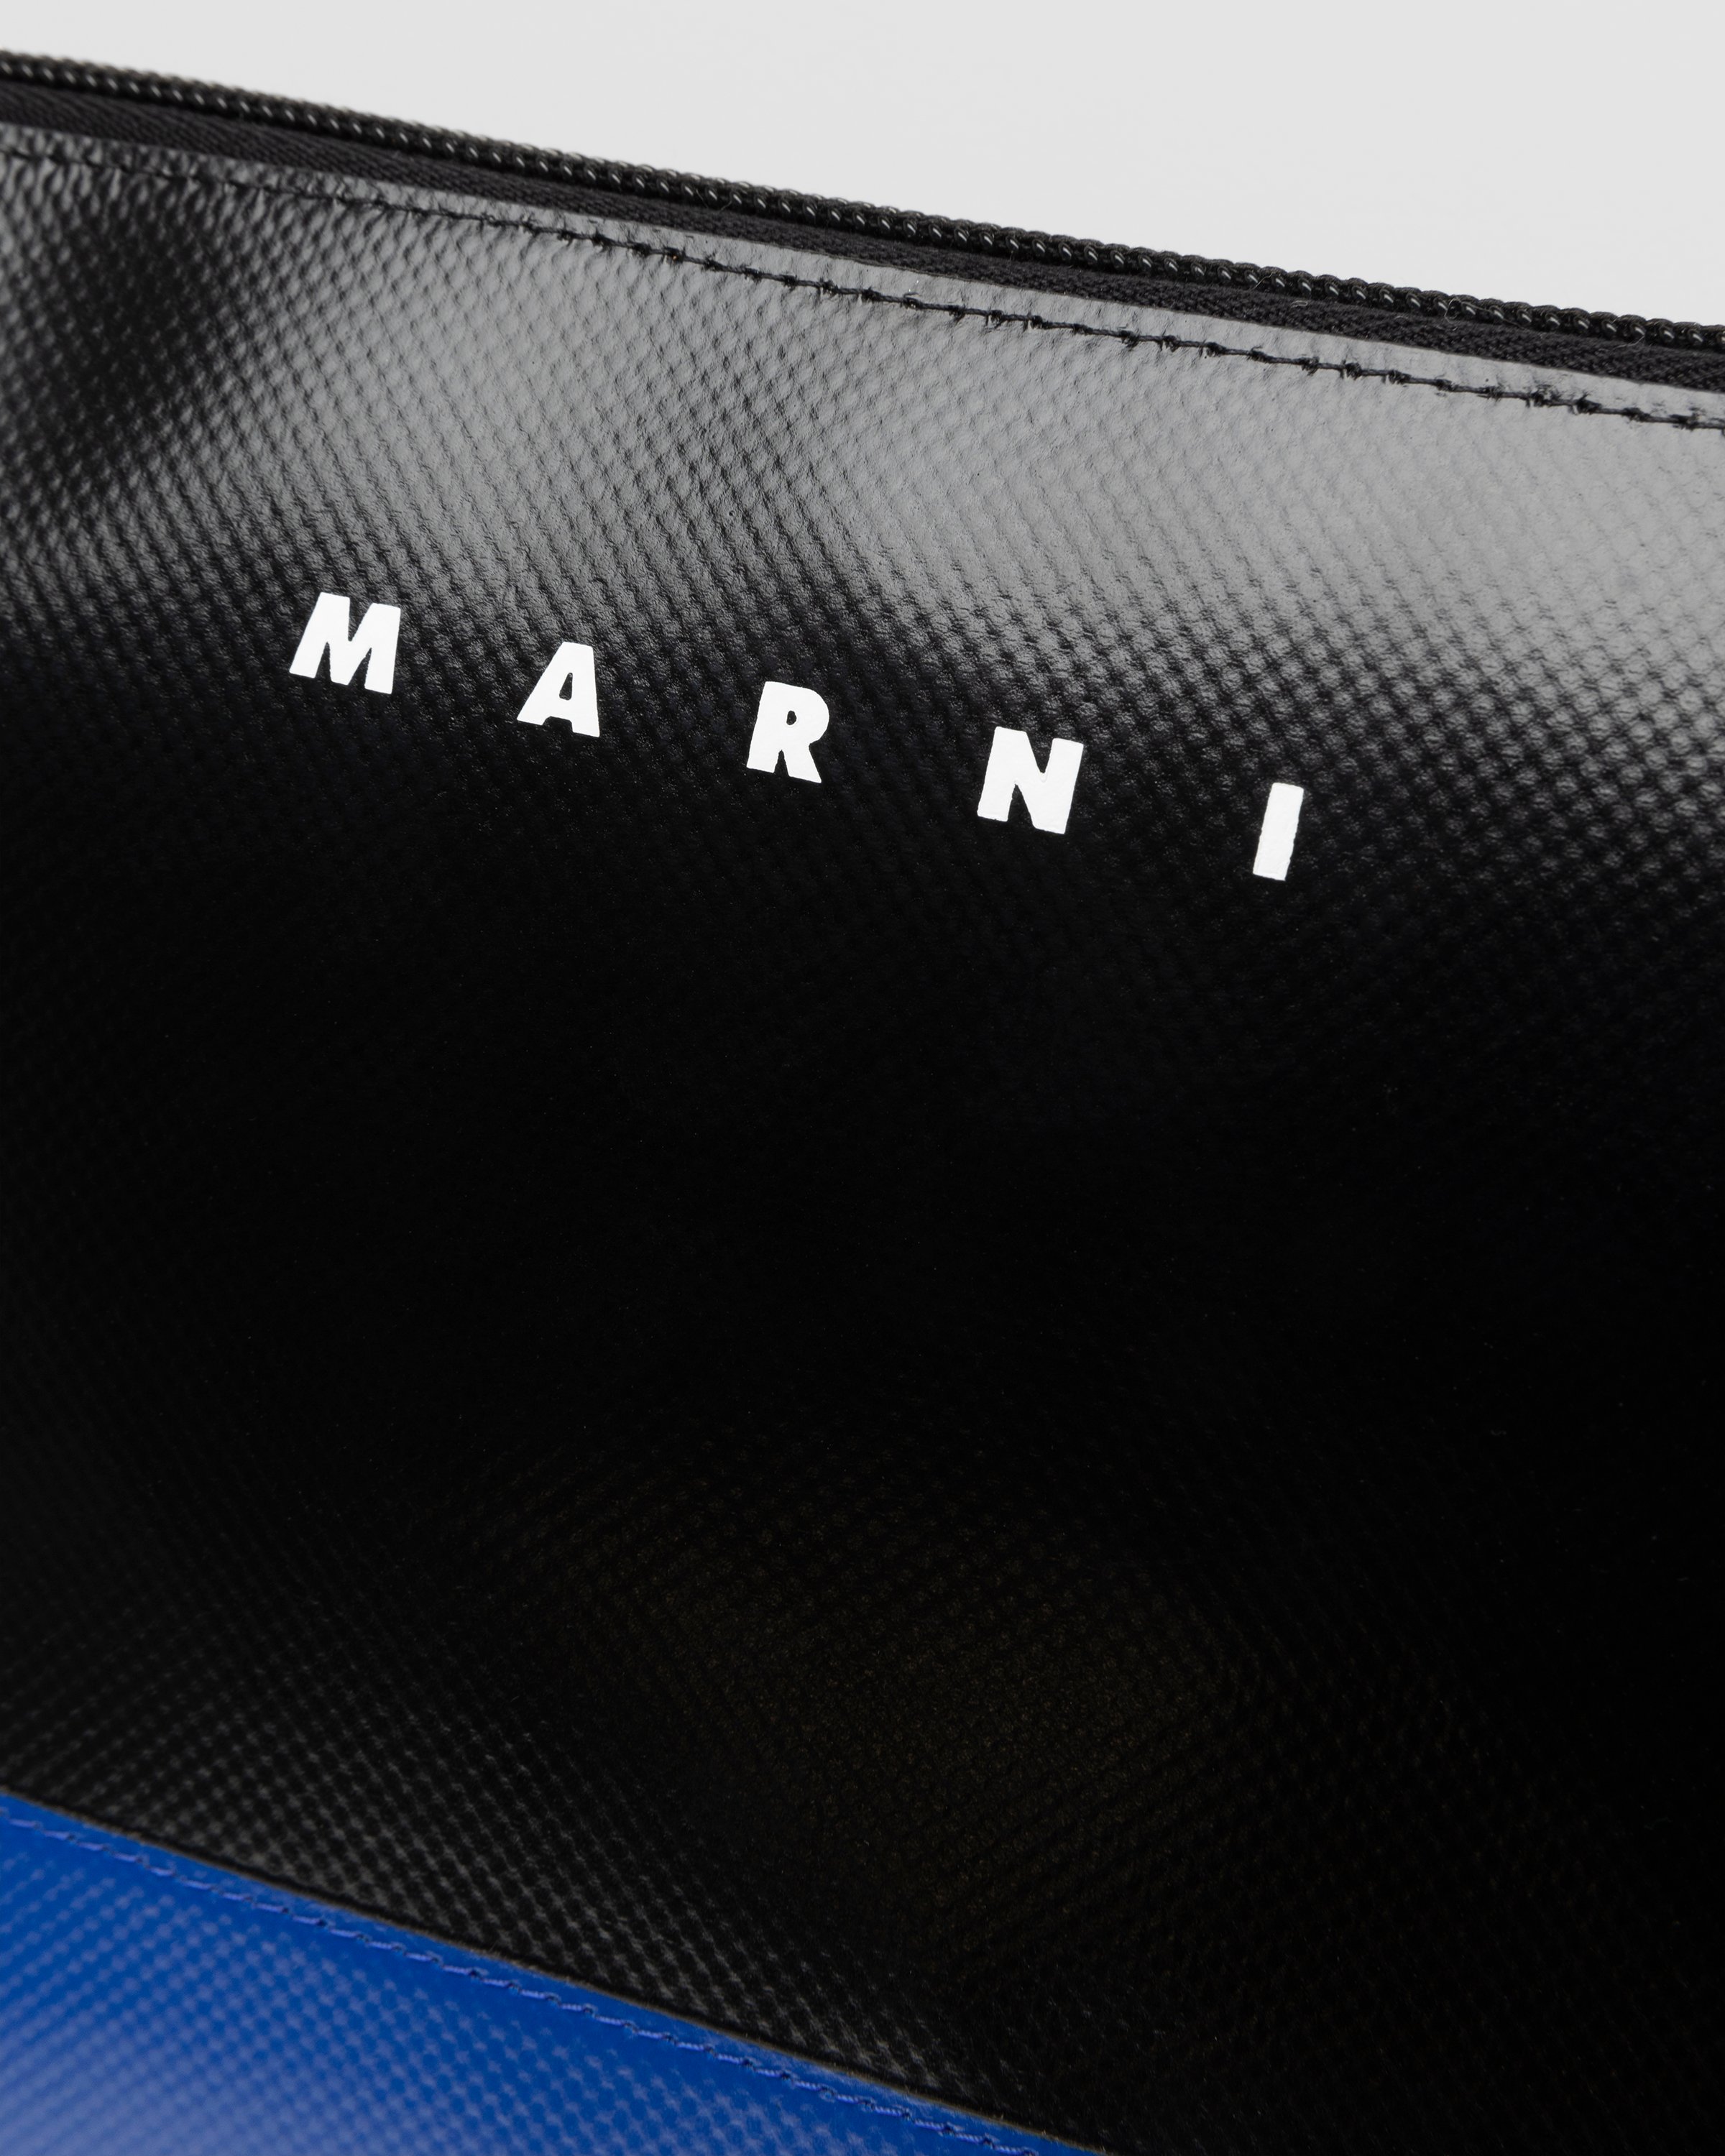 Marni - Tribeca Crossbody Bag Astral Blue - Accessories - Black - Image 4